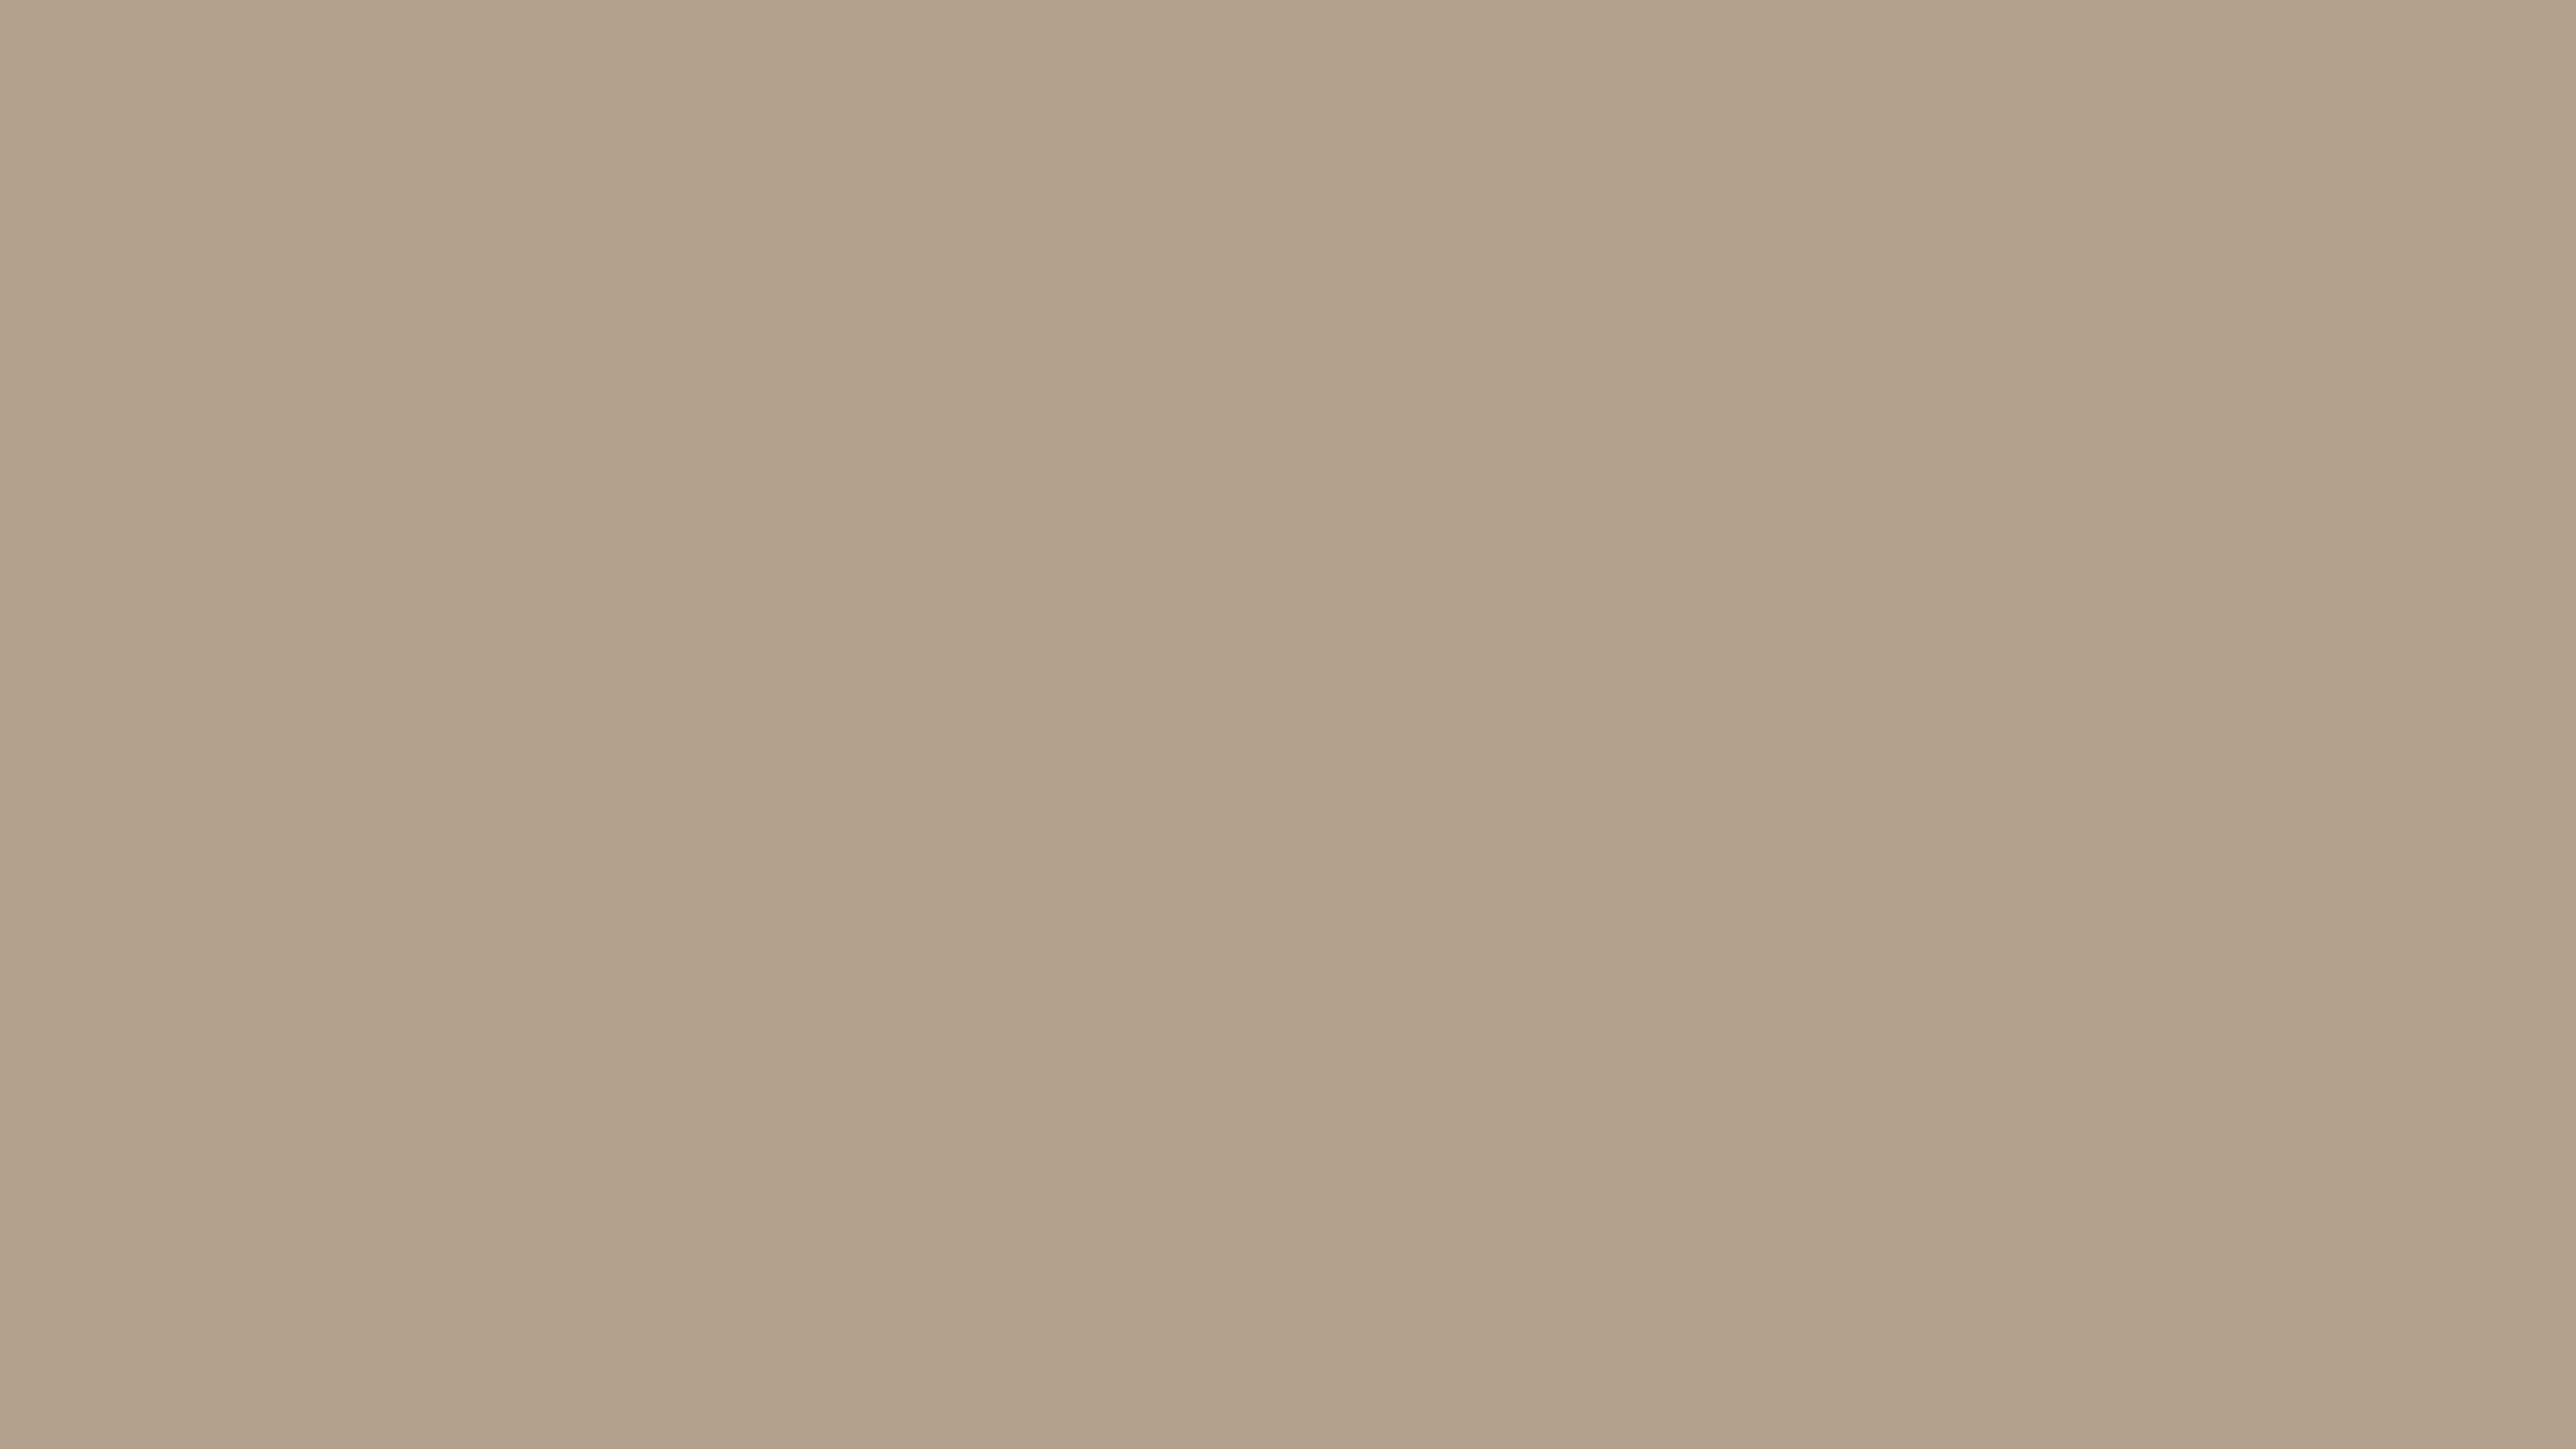 Gilded Beige Solid Color Background Image | Free Image Generator